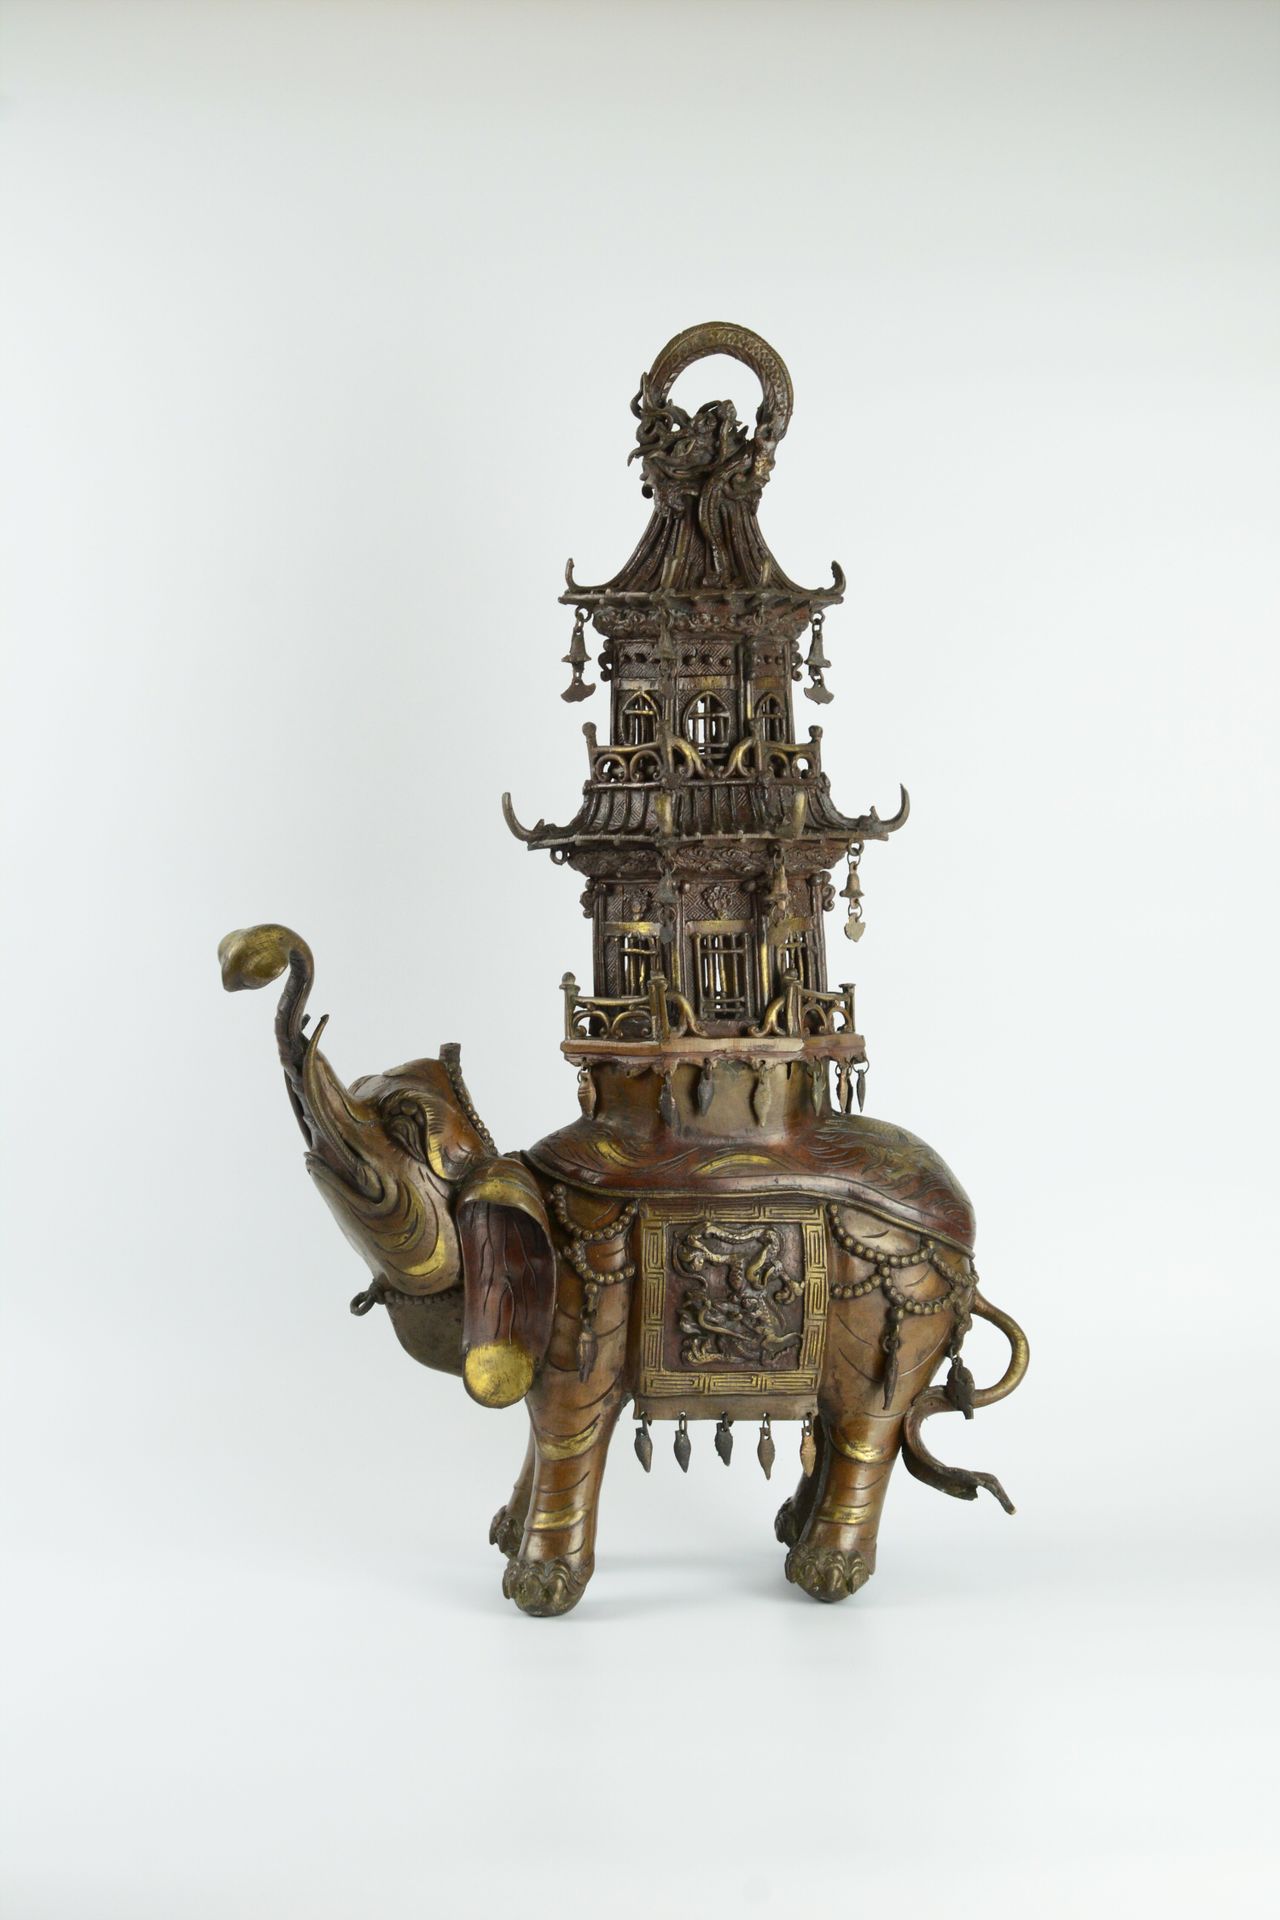 The Hidden Gems of Slovenian Museums elephant incense burner.JPG